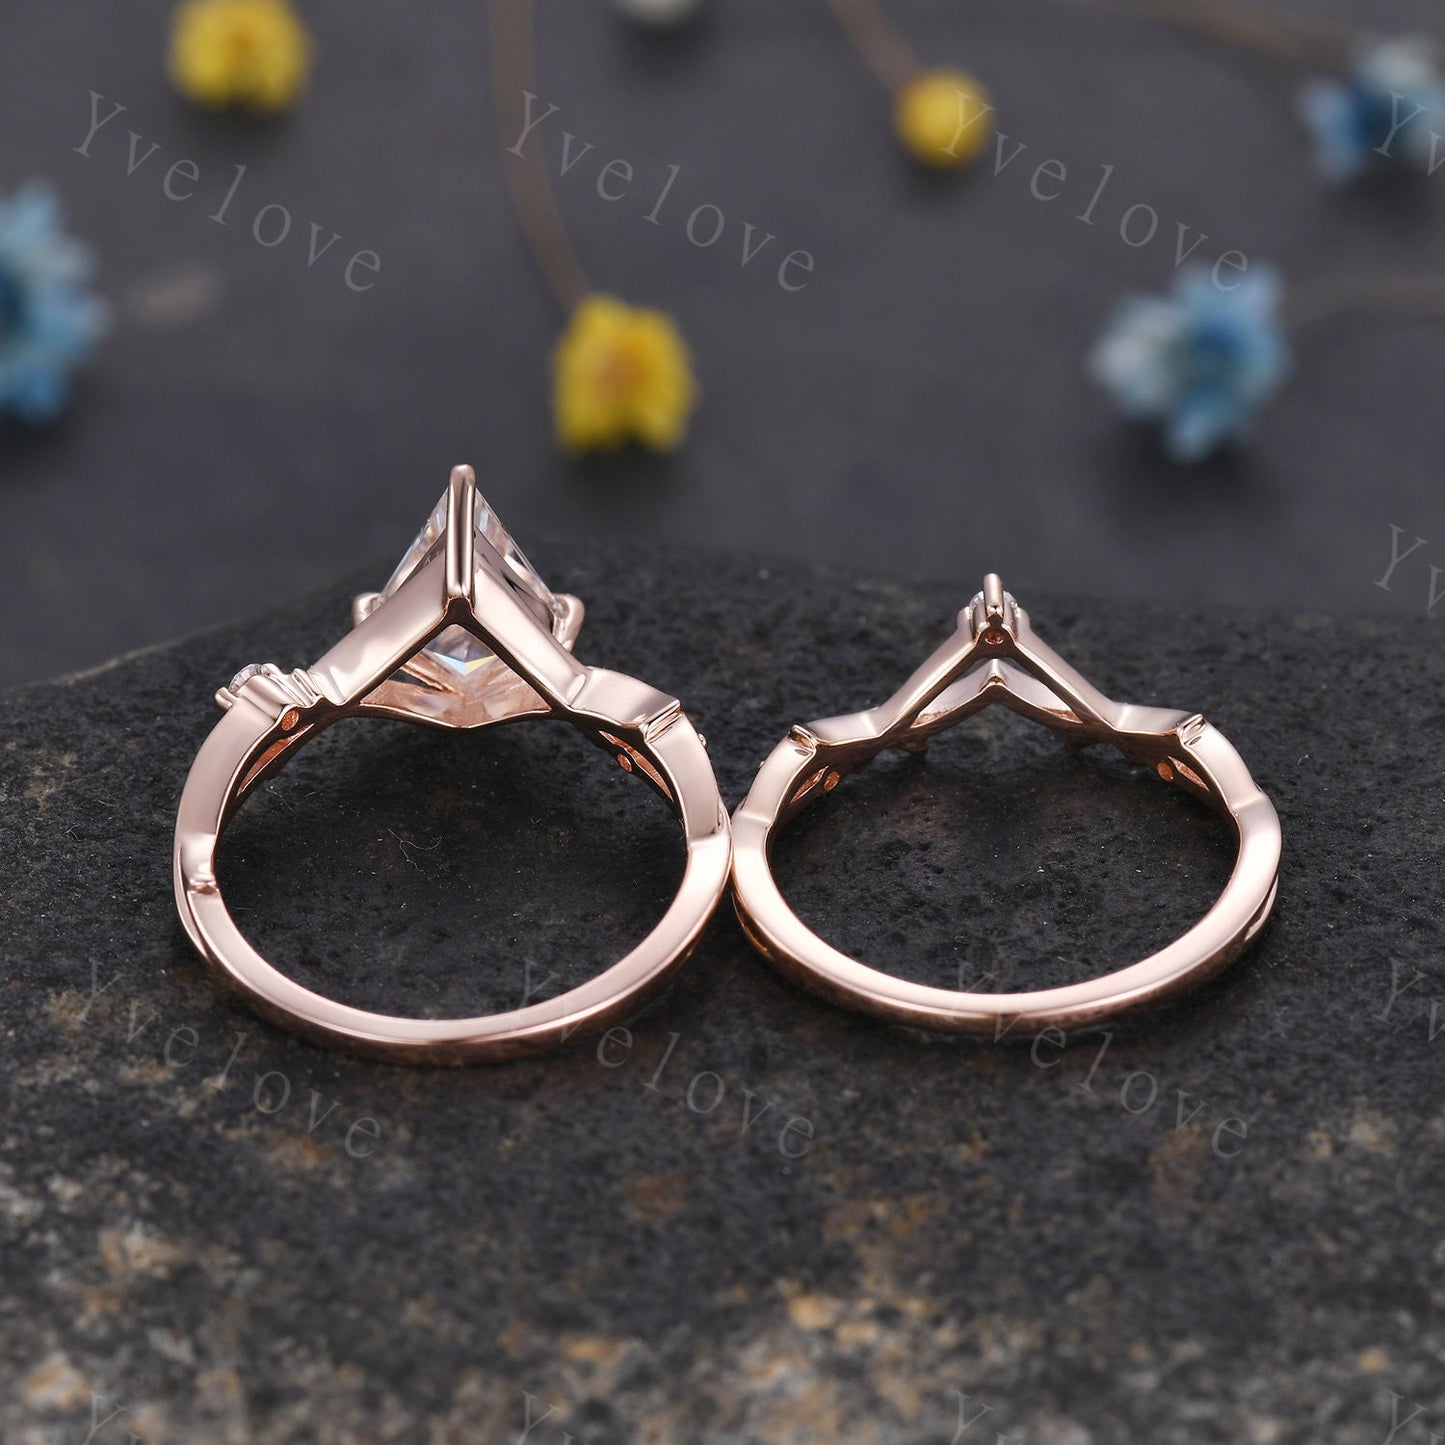 Vintage Kite Shaped Moissanite Engagement Ring Set,Twisted Ring,Leaf Vines Moissanite Bridal Set,Branch Ring,Dainty Twig Diamond Ring Gift